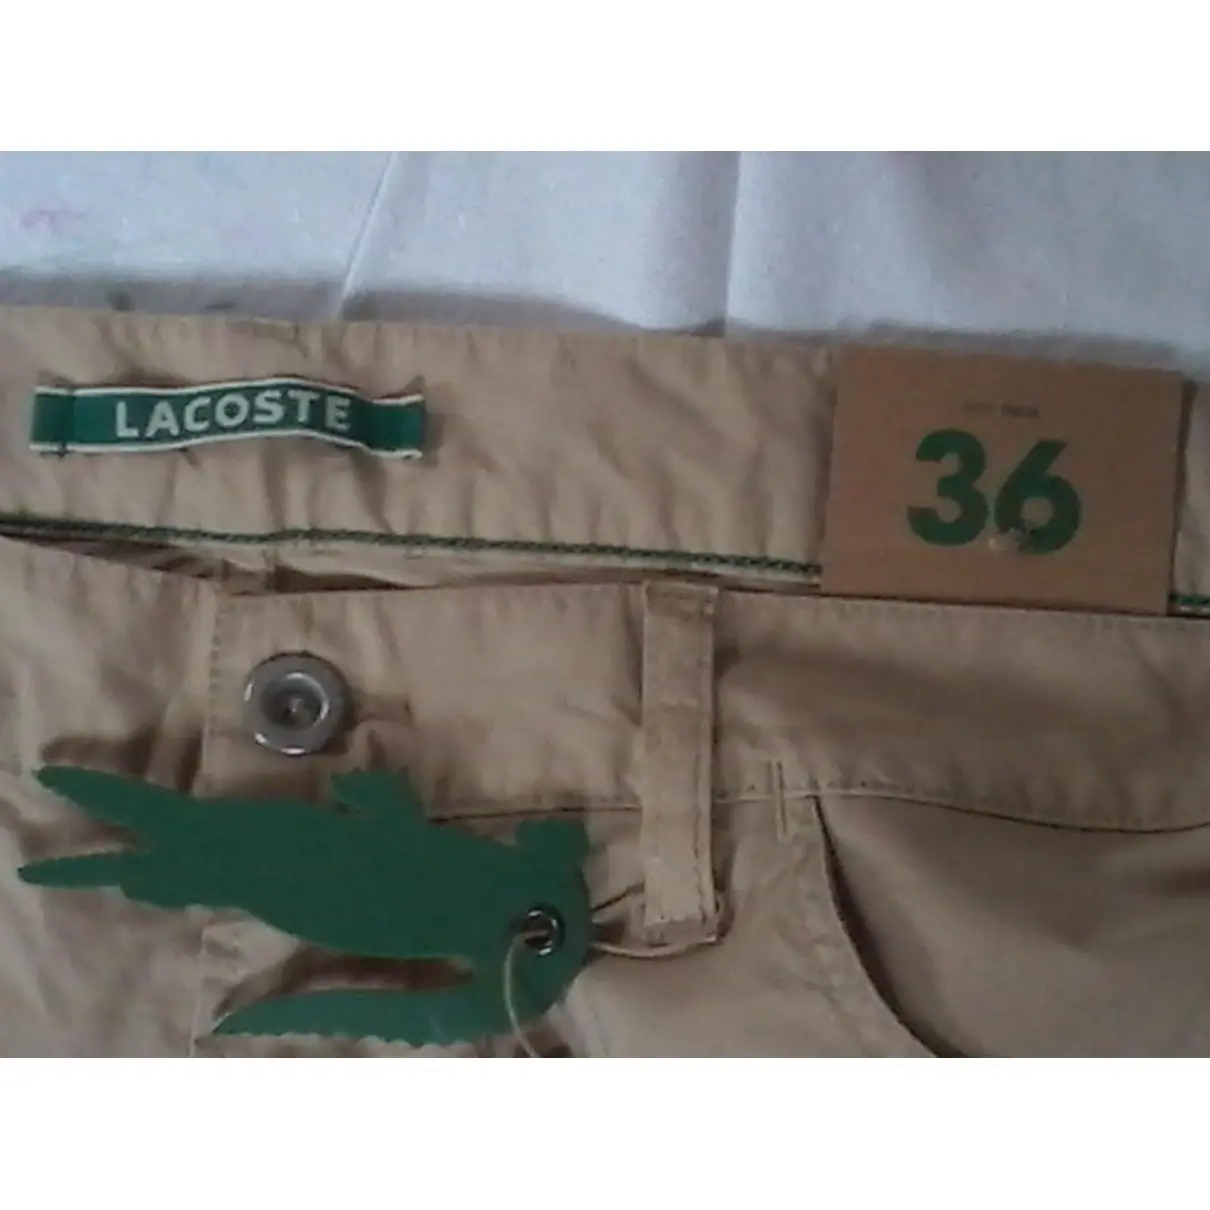 Buy Lacoste Trousers online